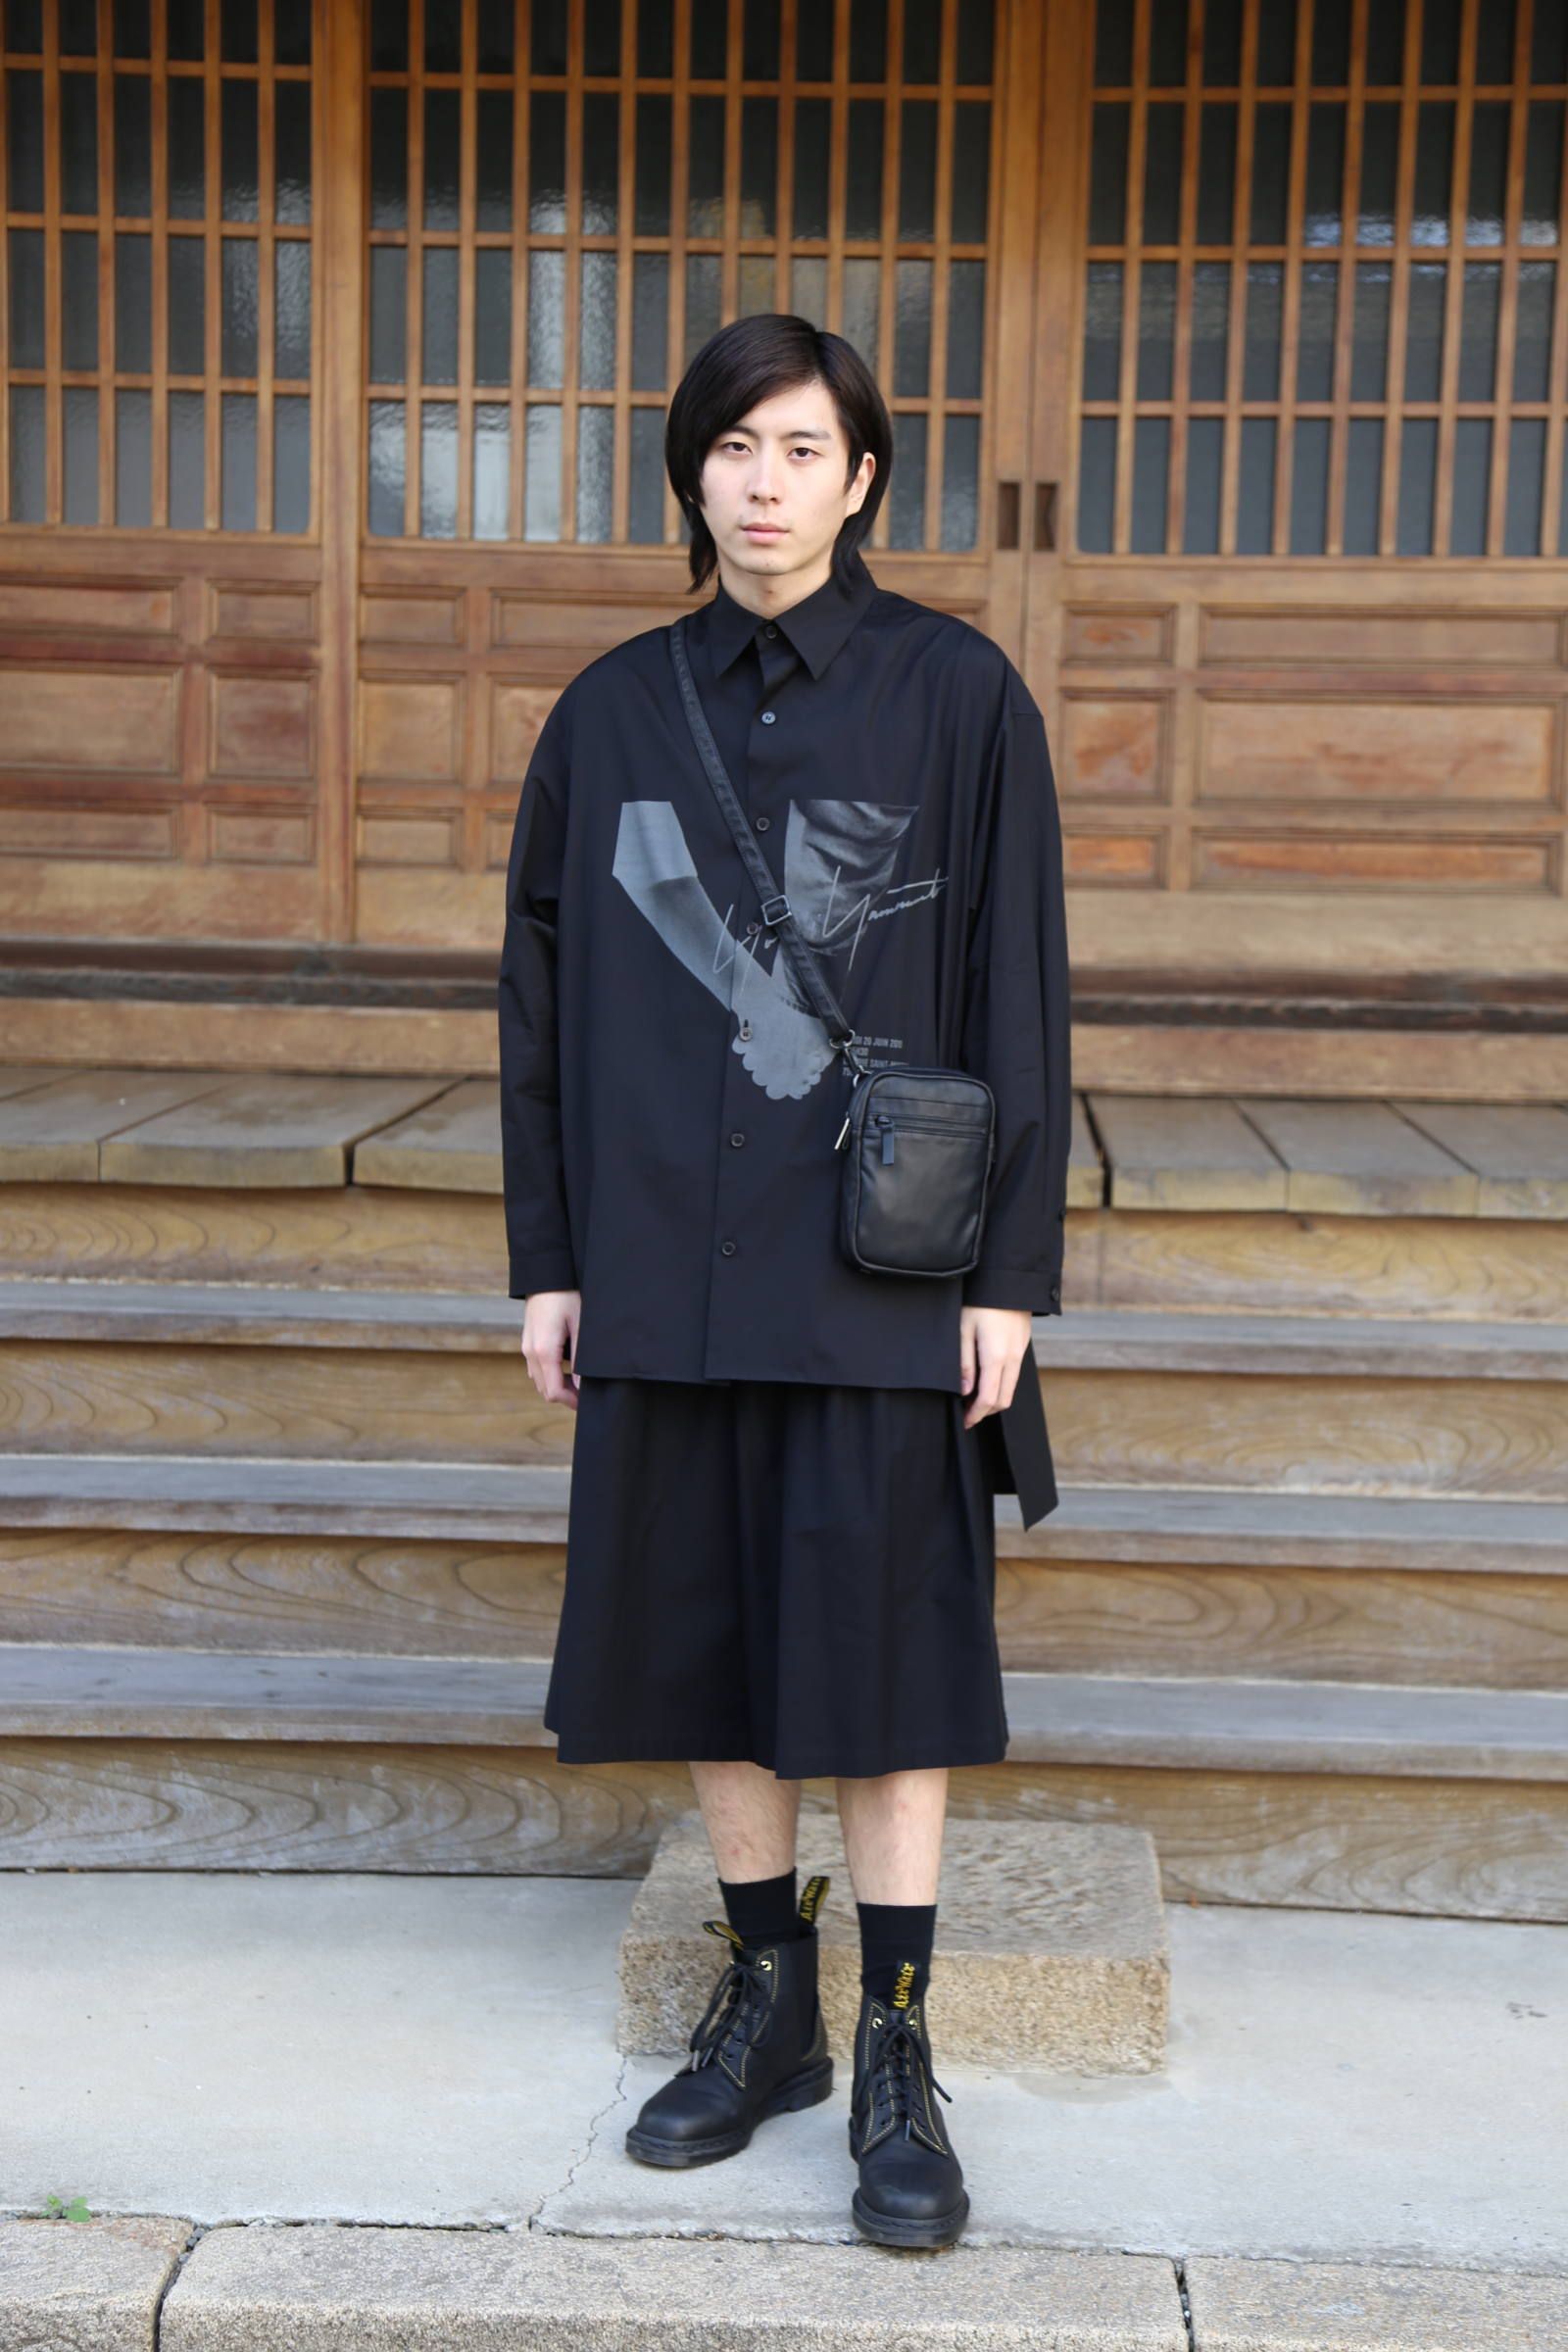 Yohji Yamamoto 20ss スタッフシャツ